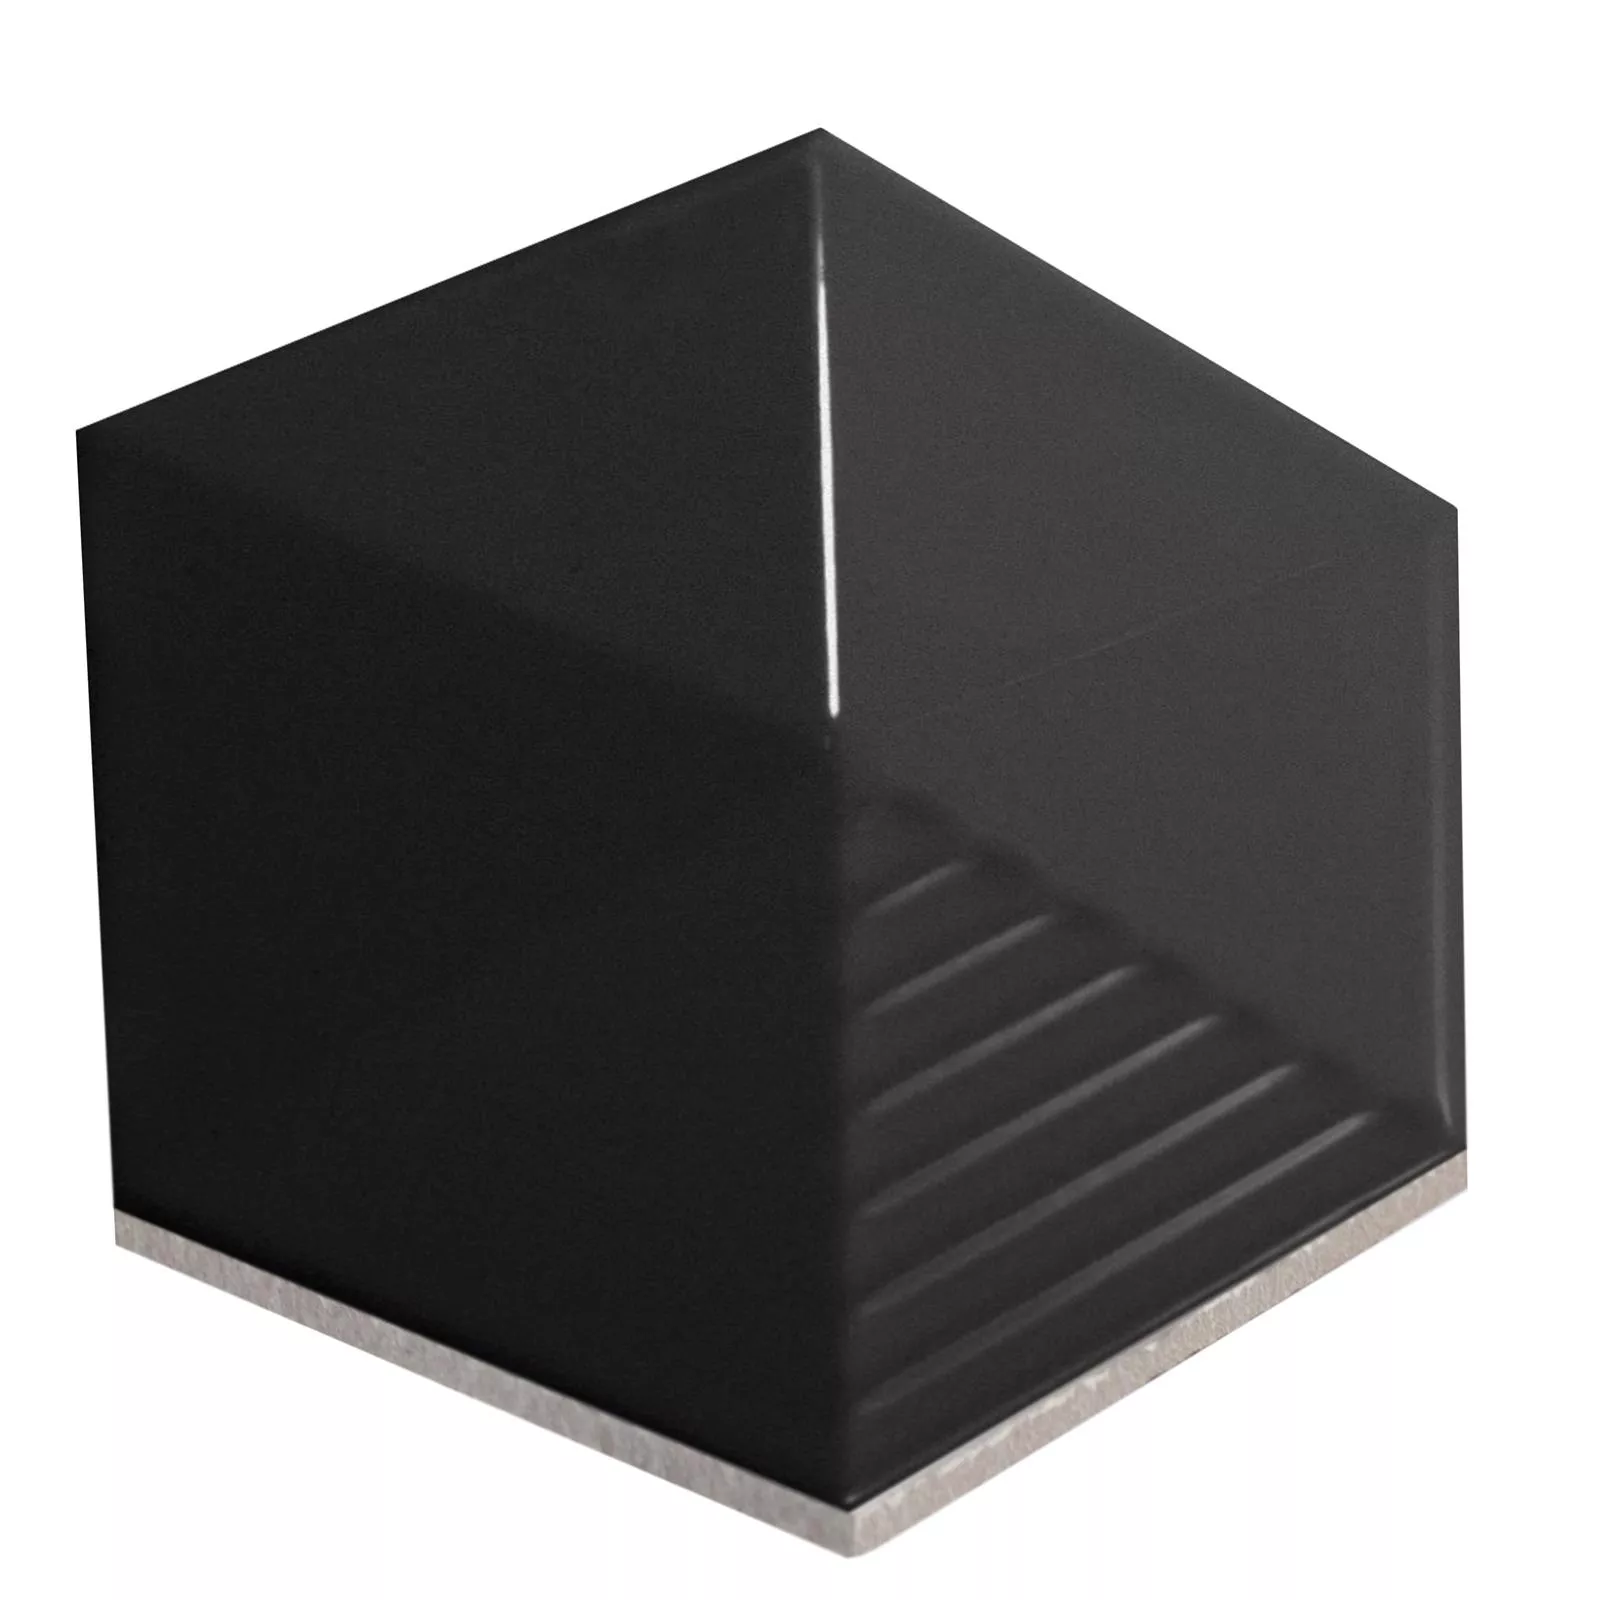 Sample Wall Tiles Rockford 3D Hexagon 12,4x10,7cm Black